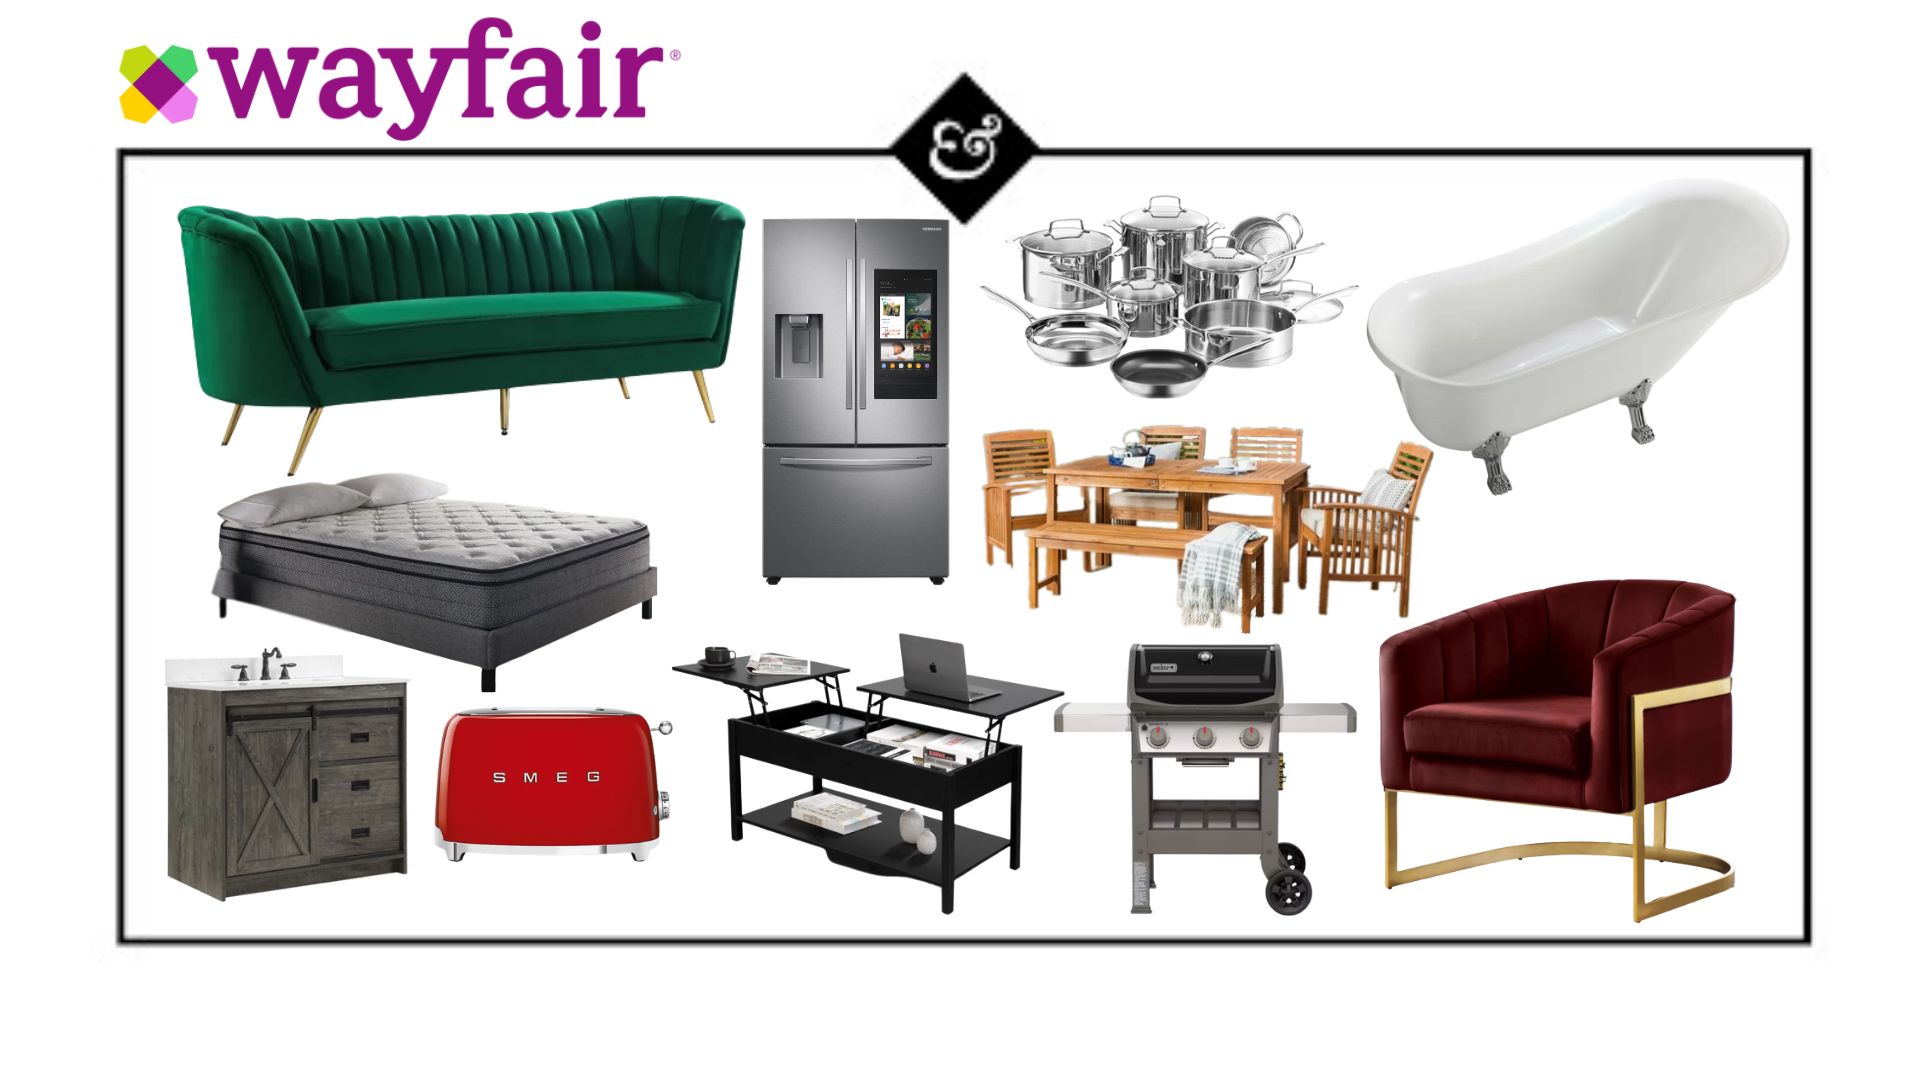 How good is Wayfair furniture?